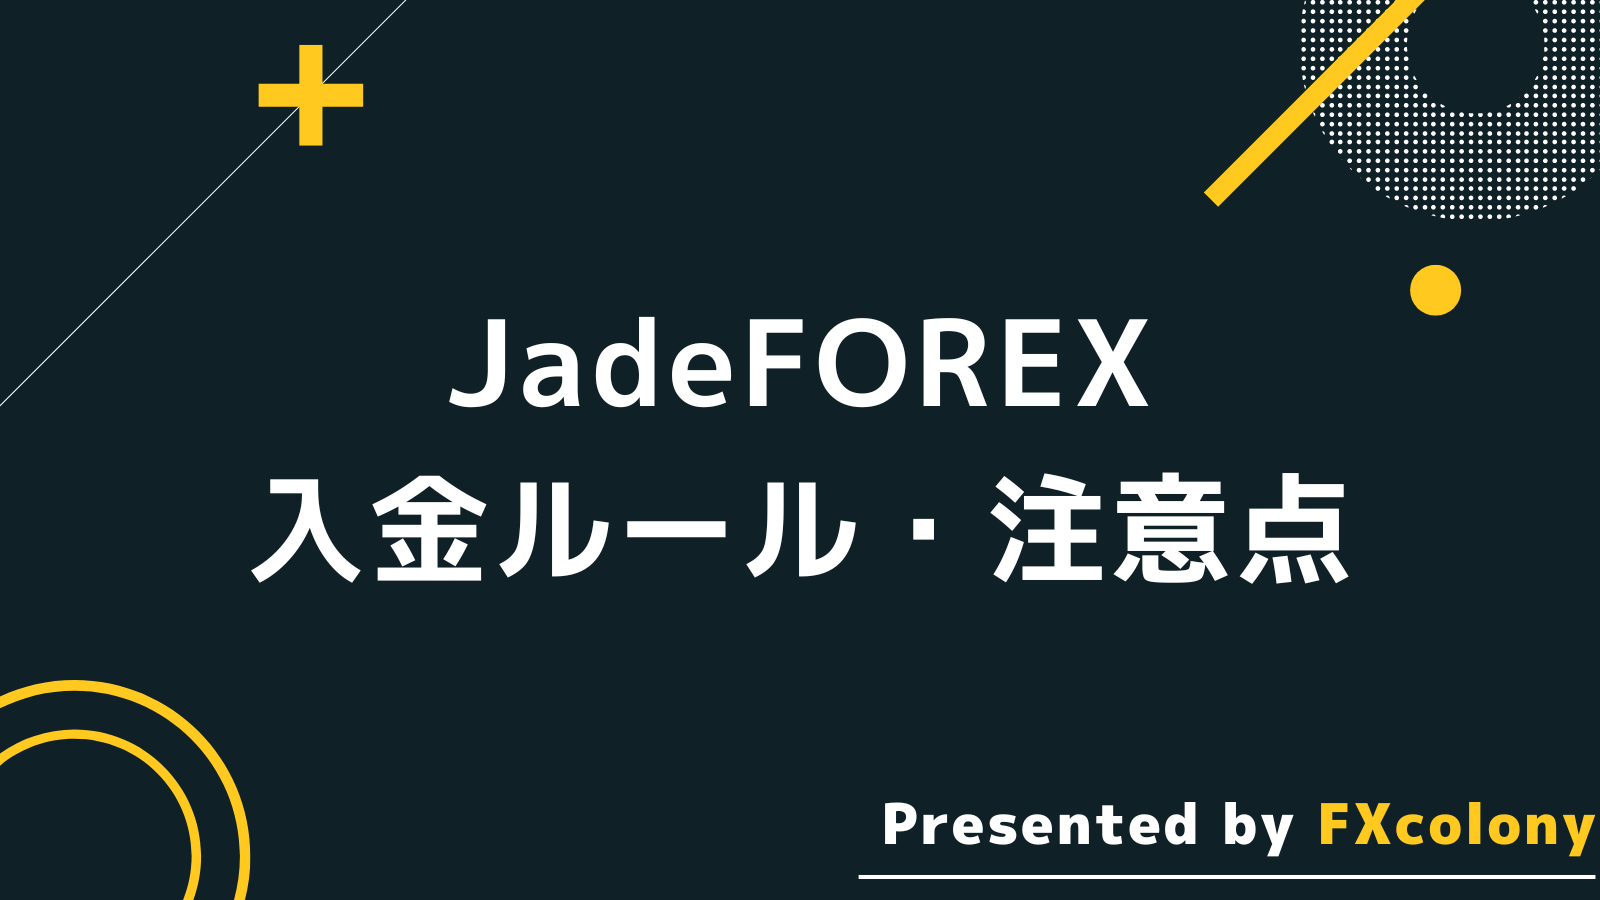 JadeForex 入金 ルール 注意点